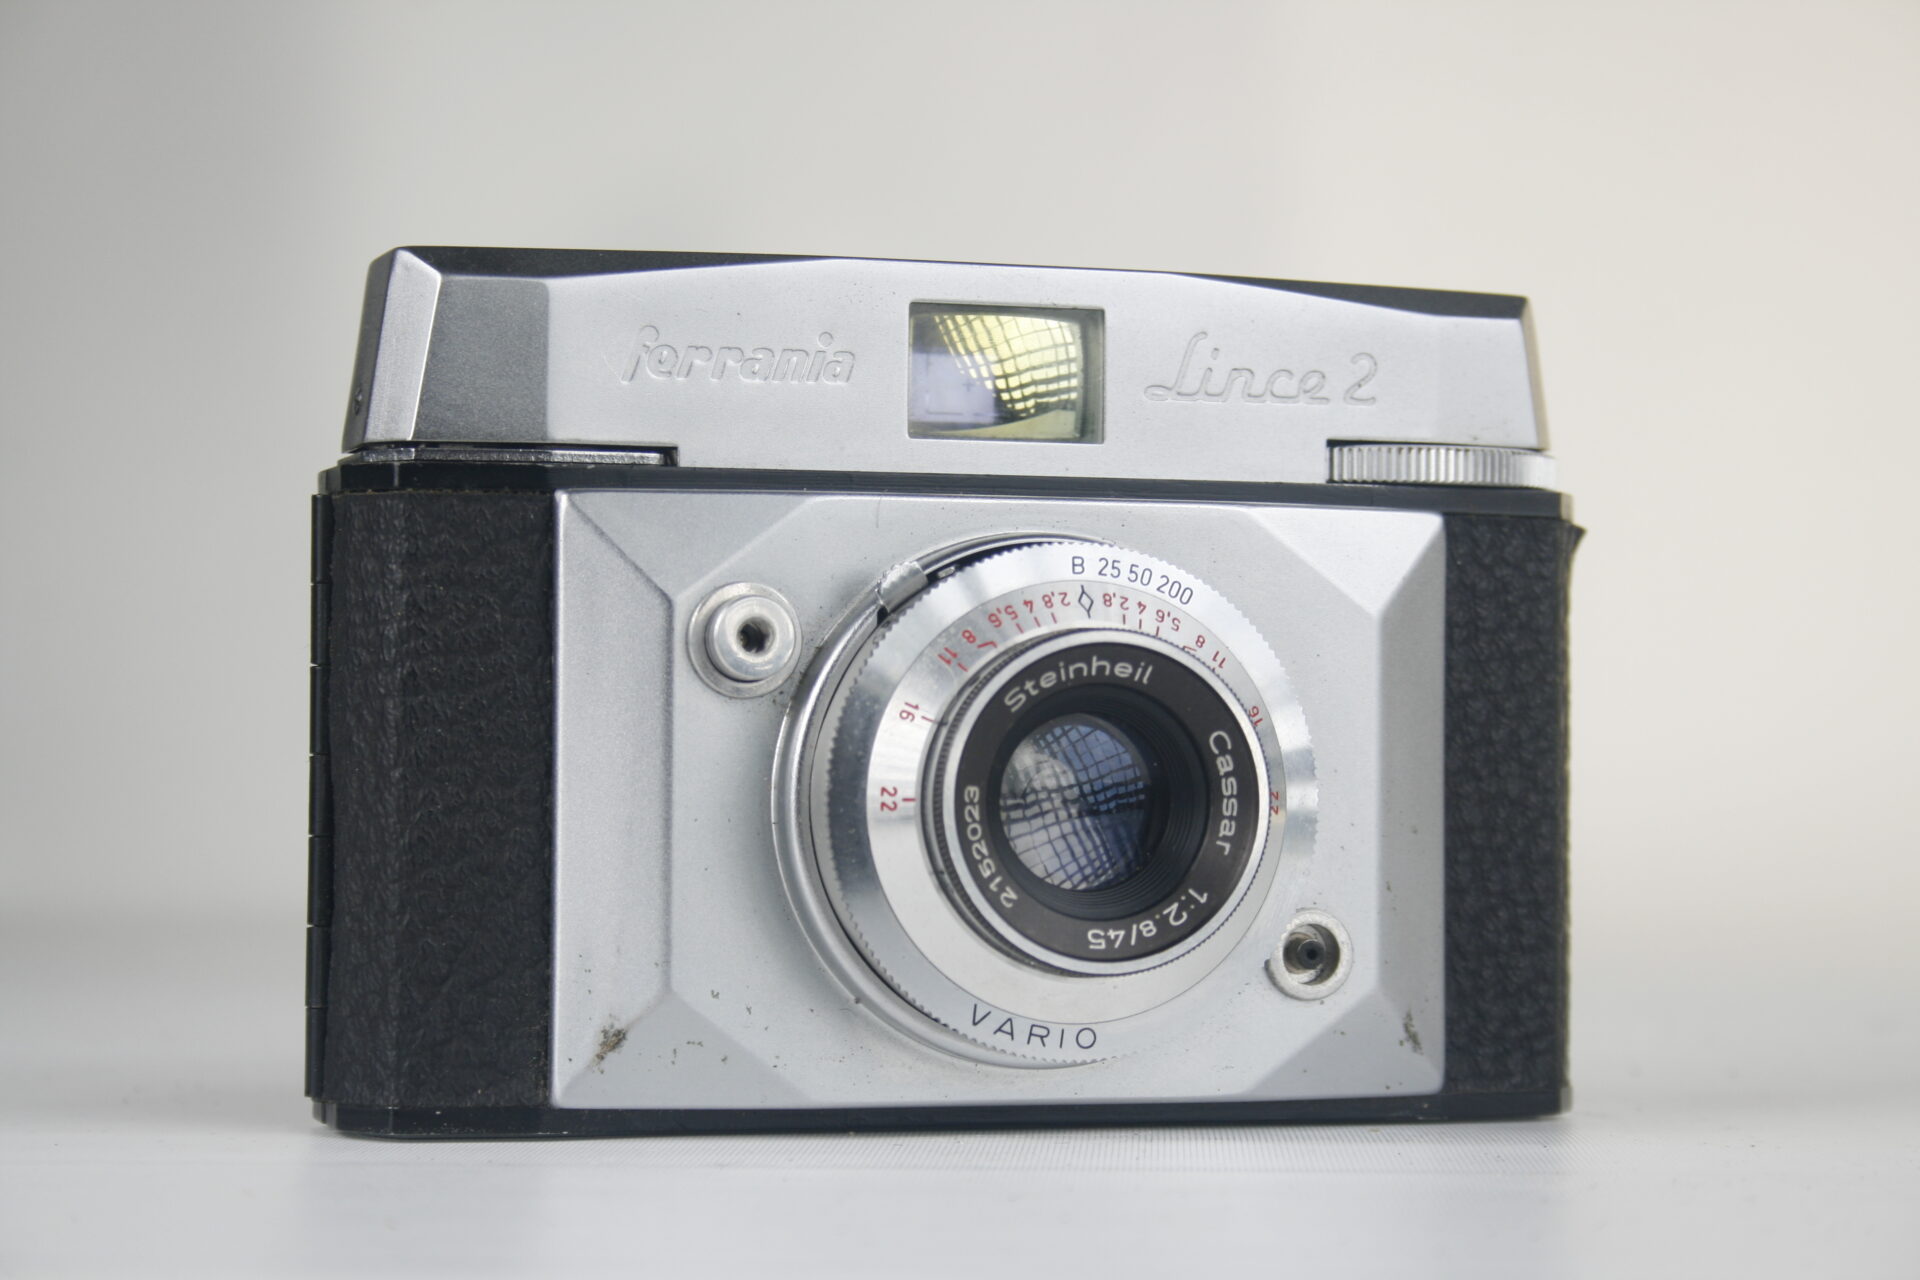 Ferrania Lince 2. 35mm viewfinder camera. 1961. Duitsland.